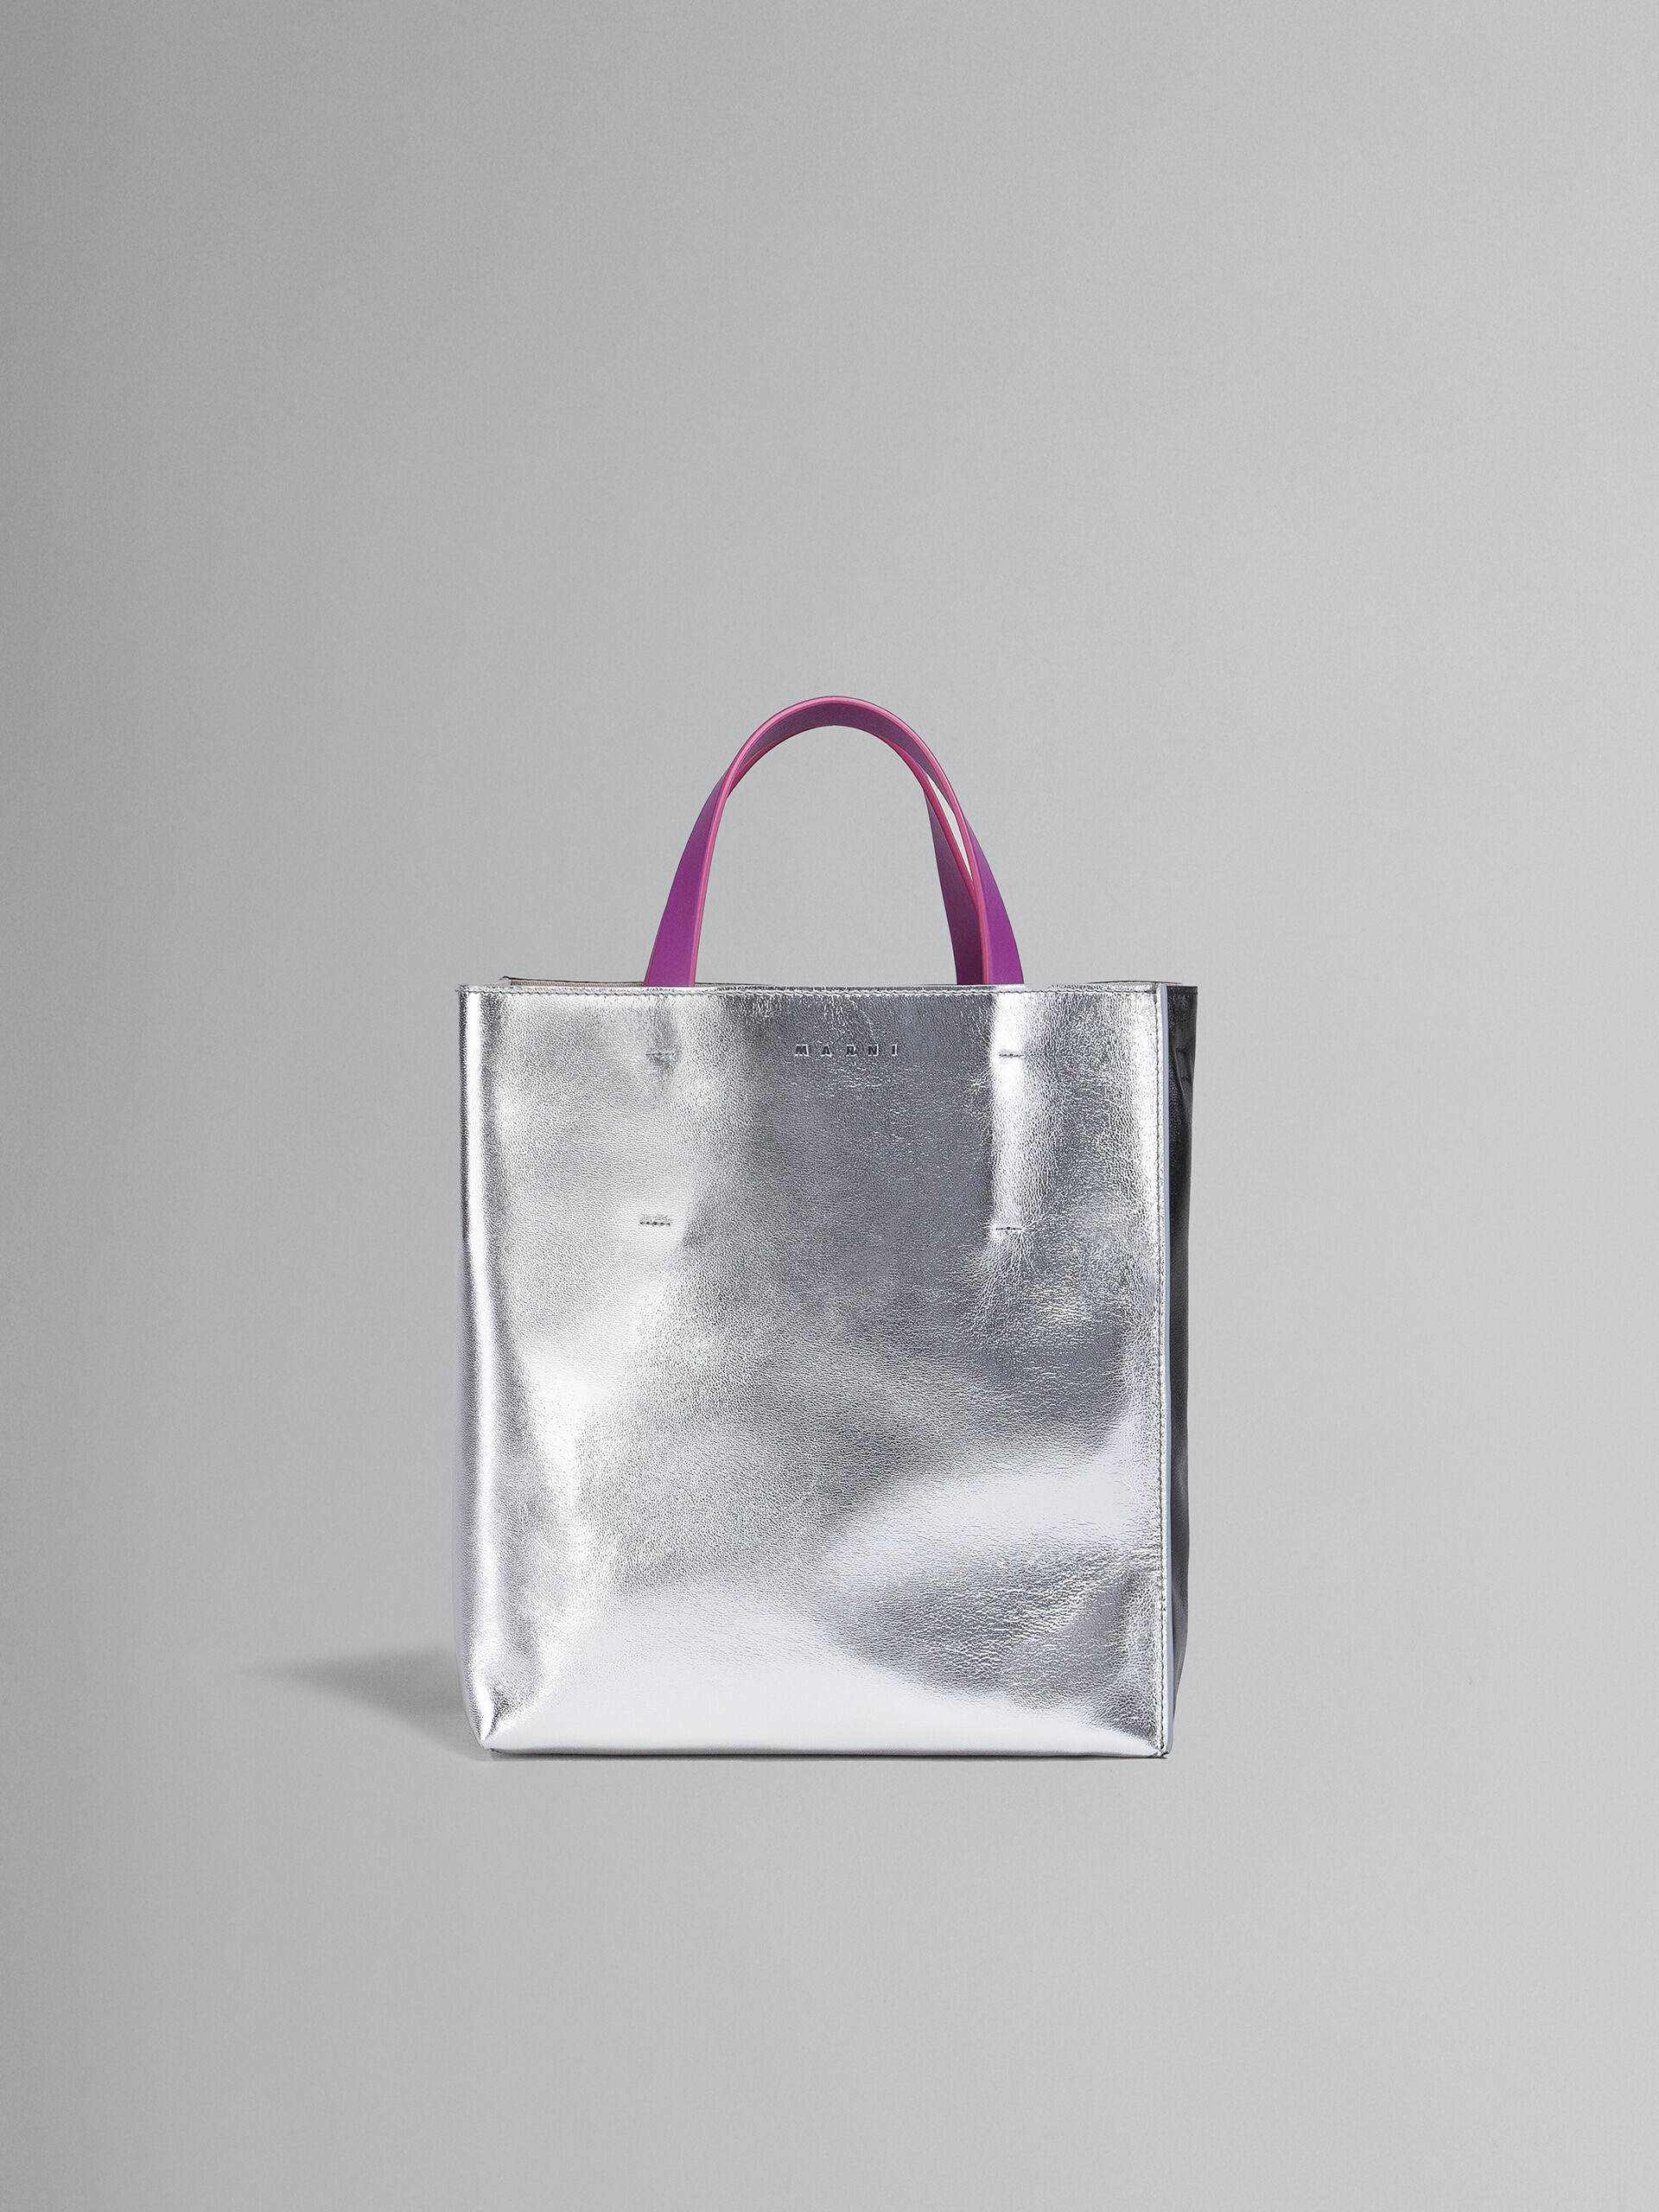 Silver black fuchsia metallic leather small MUSEO SOFT bag - Shopping Bags - Image 1